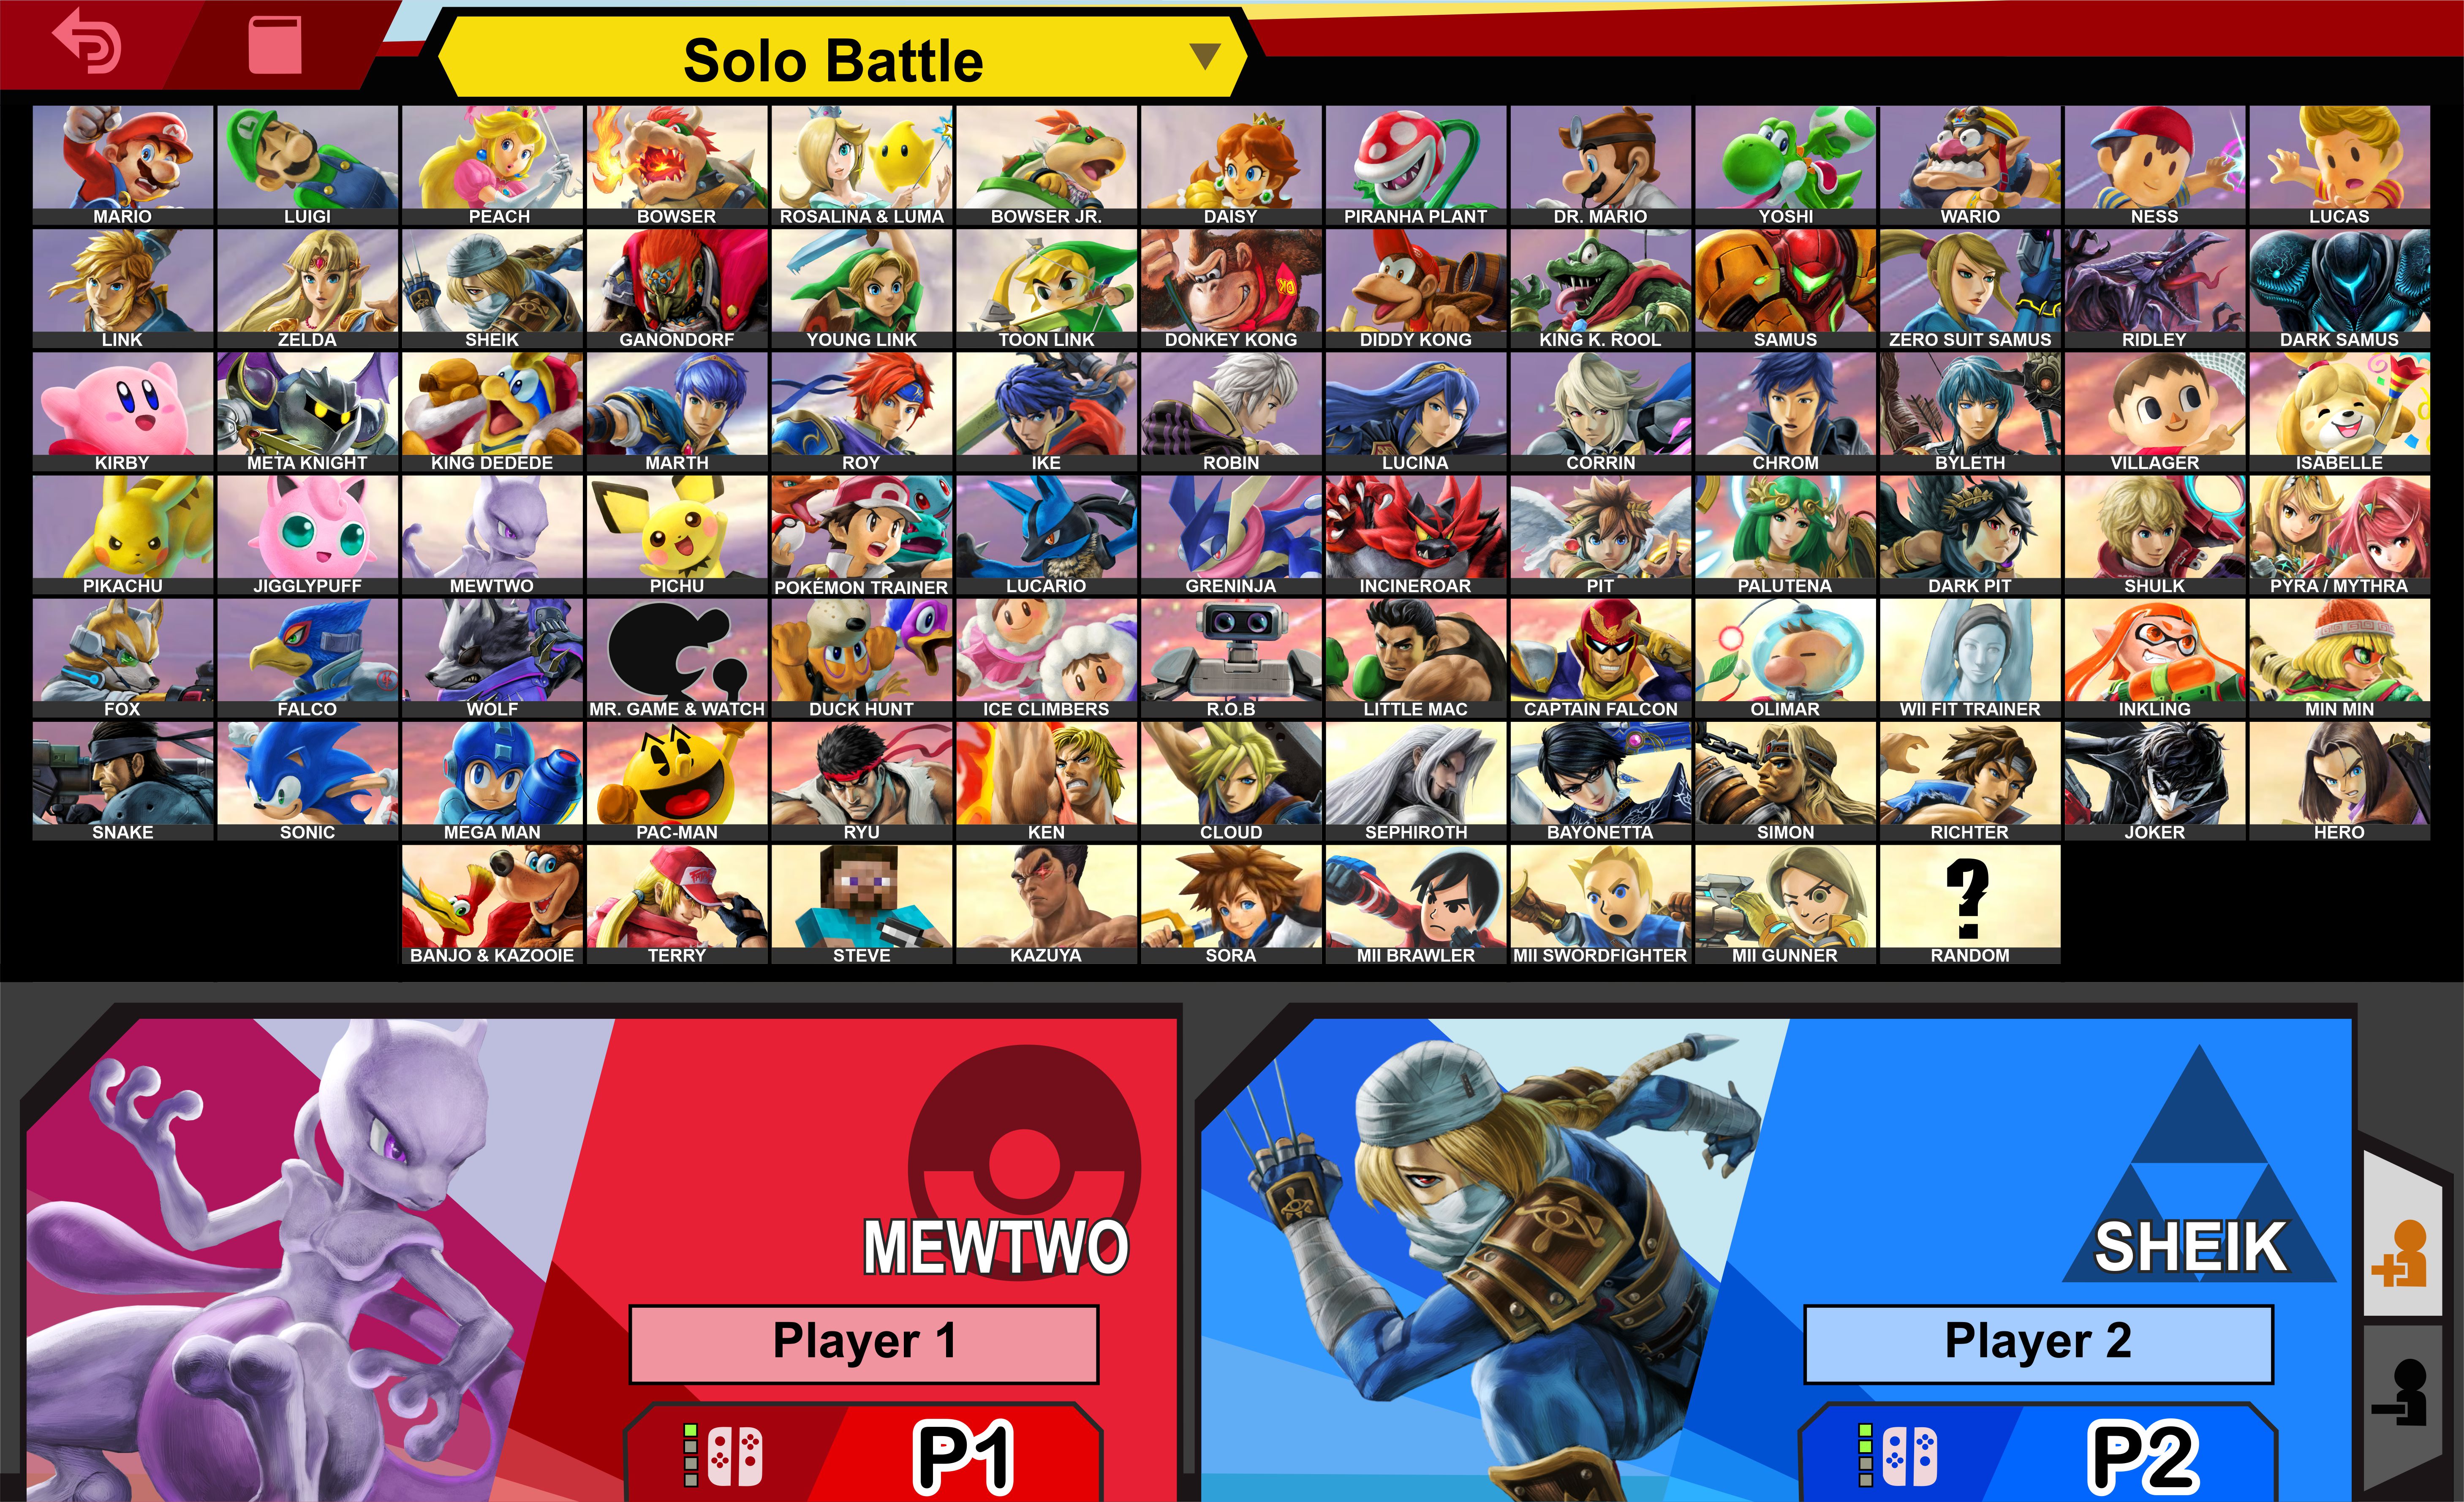 Super Smash Bros. Ultimate Full Character Roster List